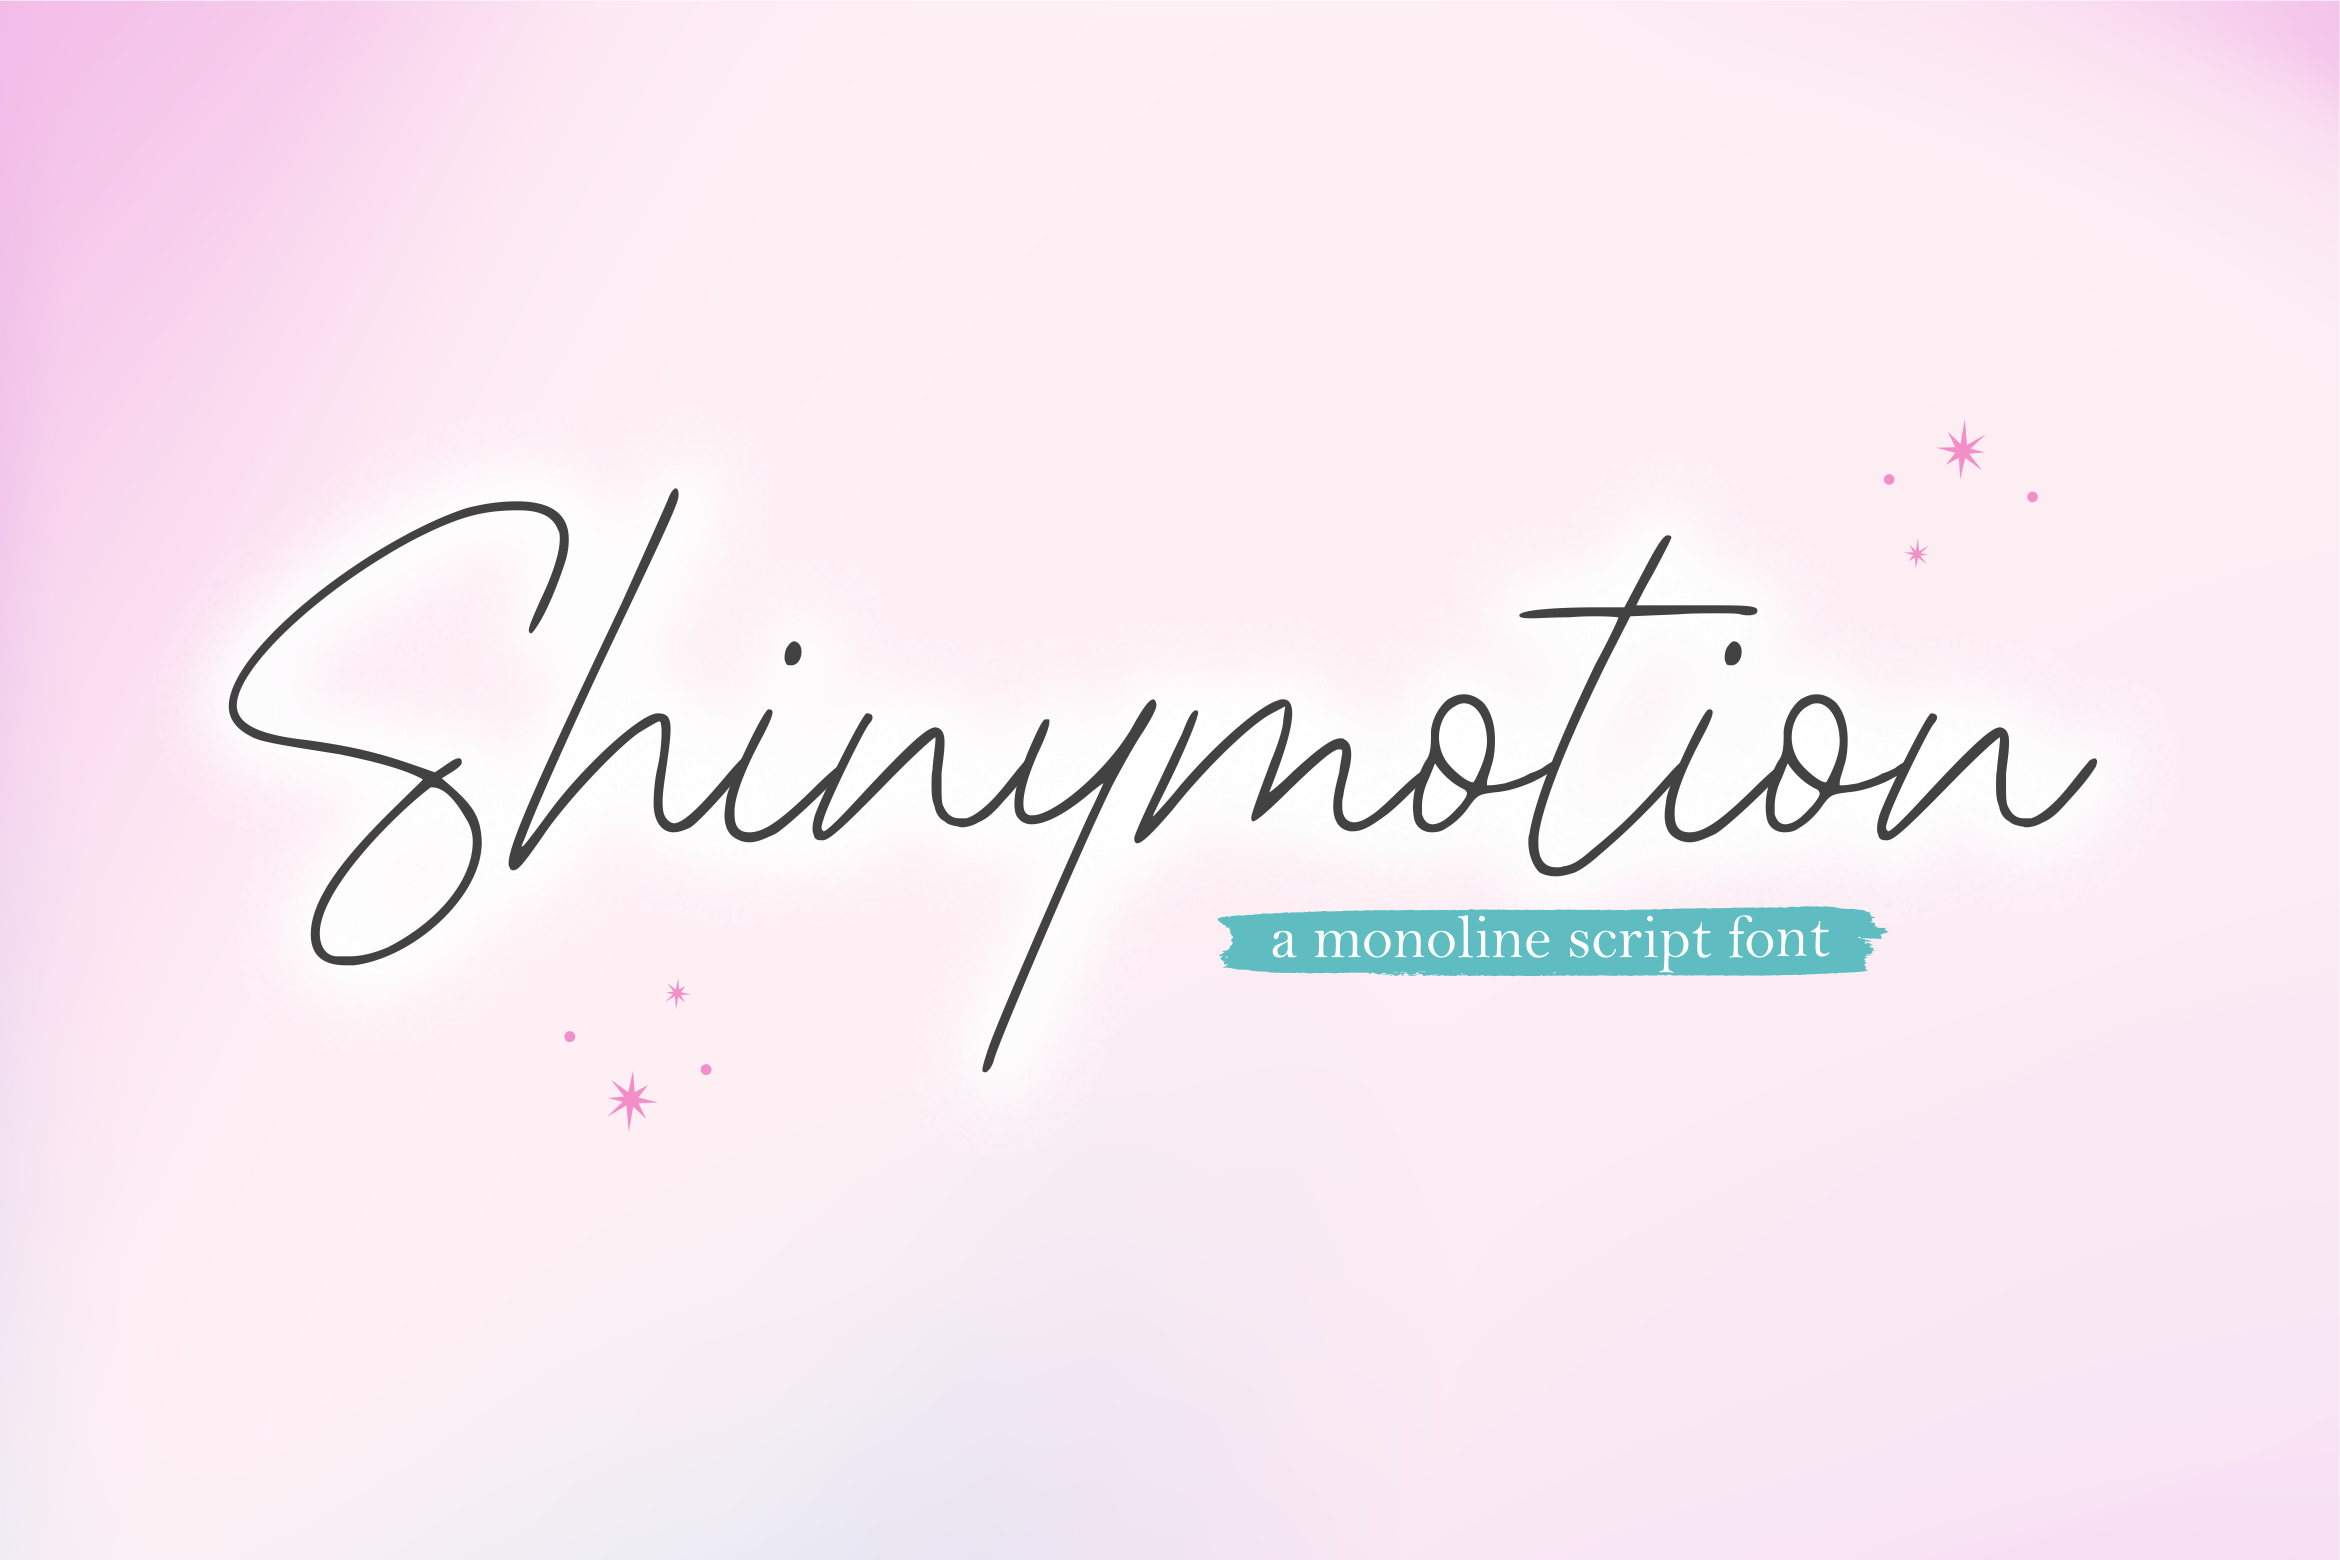 Shinymotion Handwritten Font